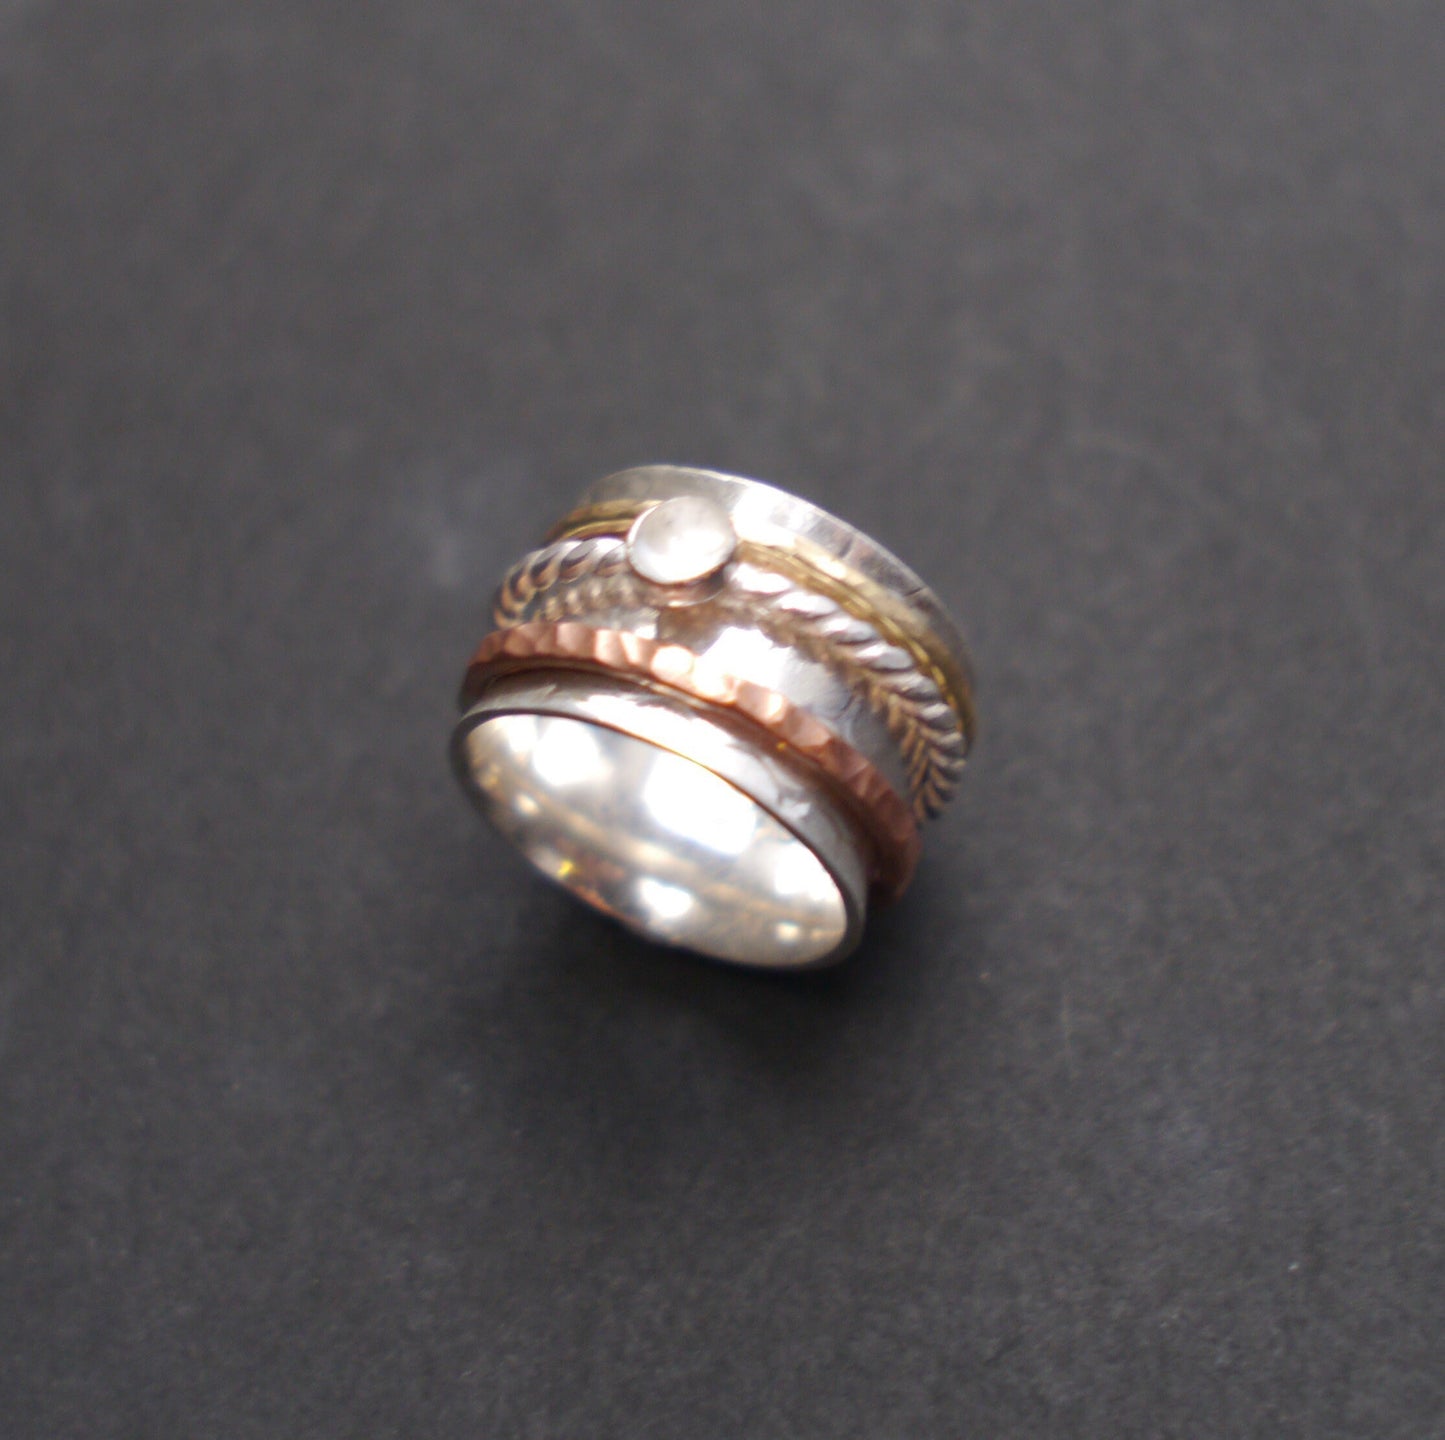 Moonstone Spinner Ring - Meditation Ring - Worry Ring - Size 5